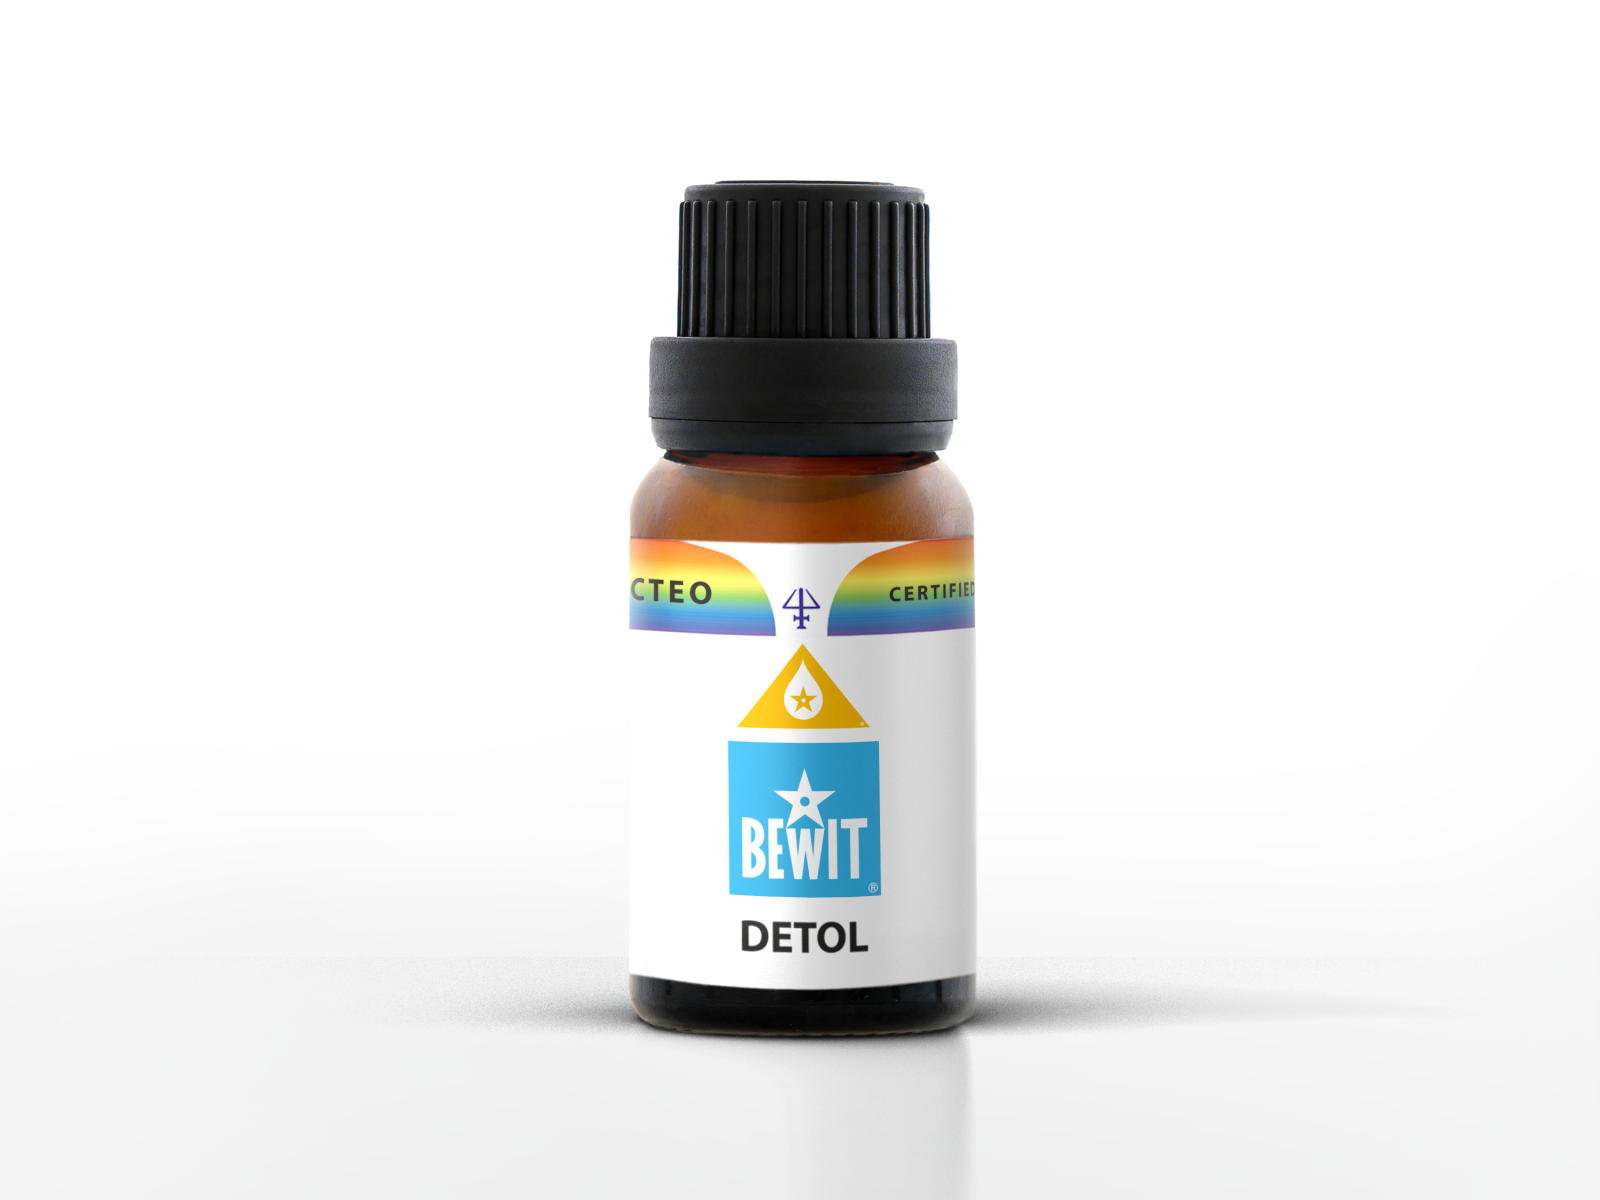 BEWIT DETOL - Blend of essential oil